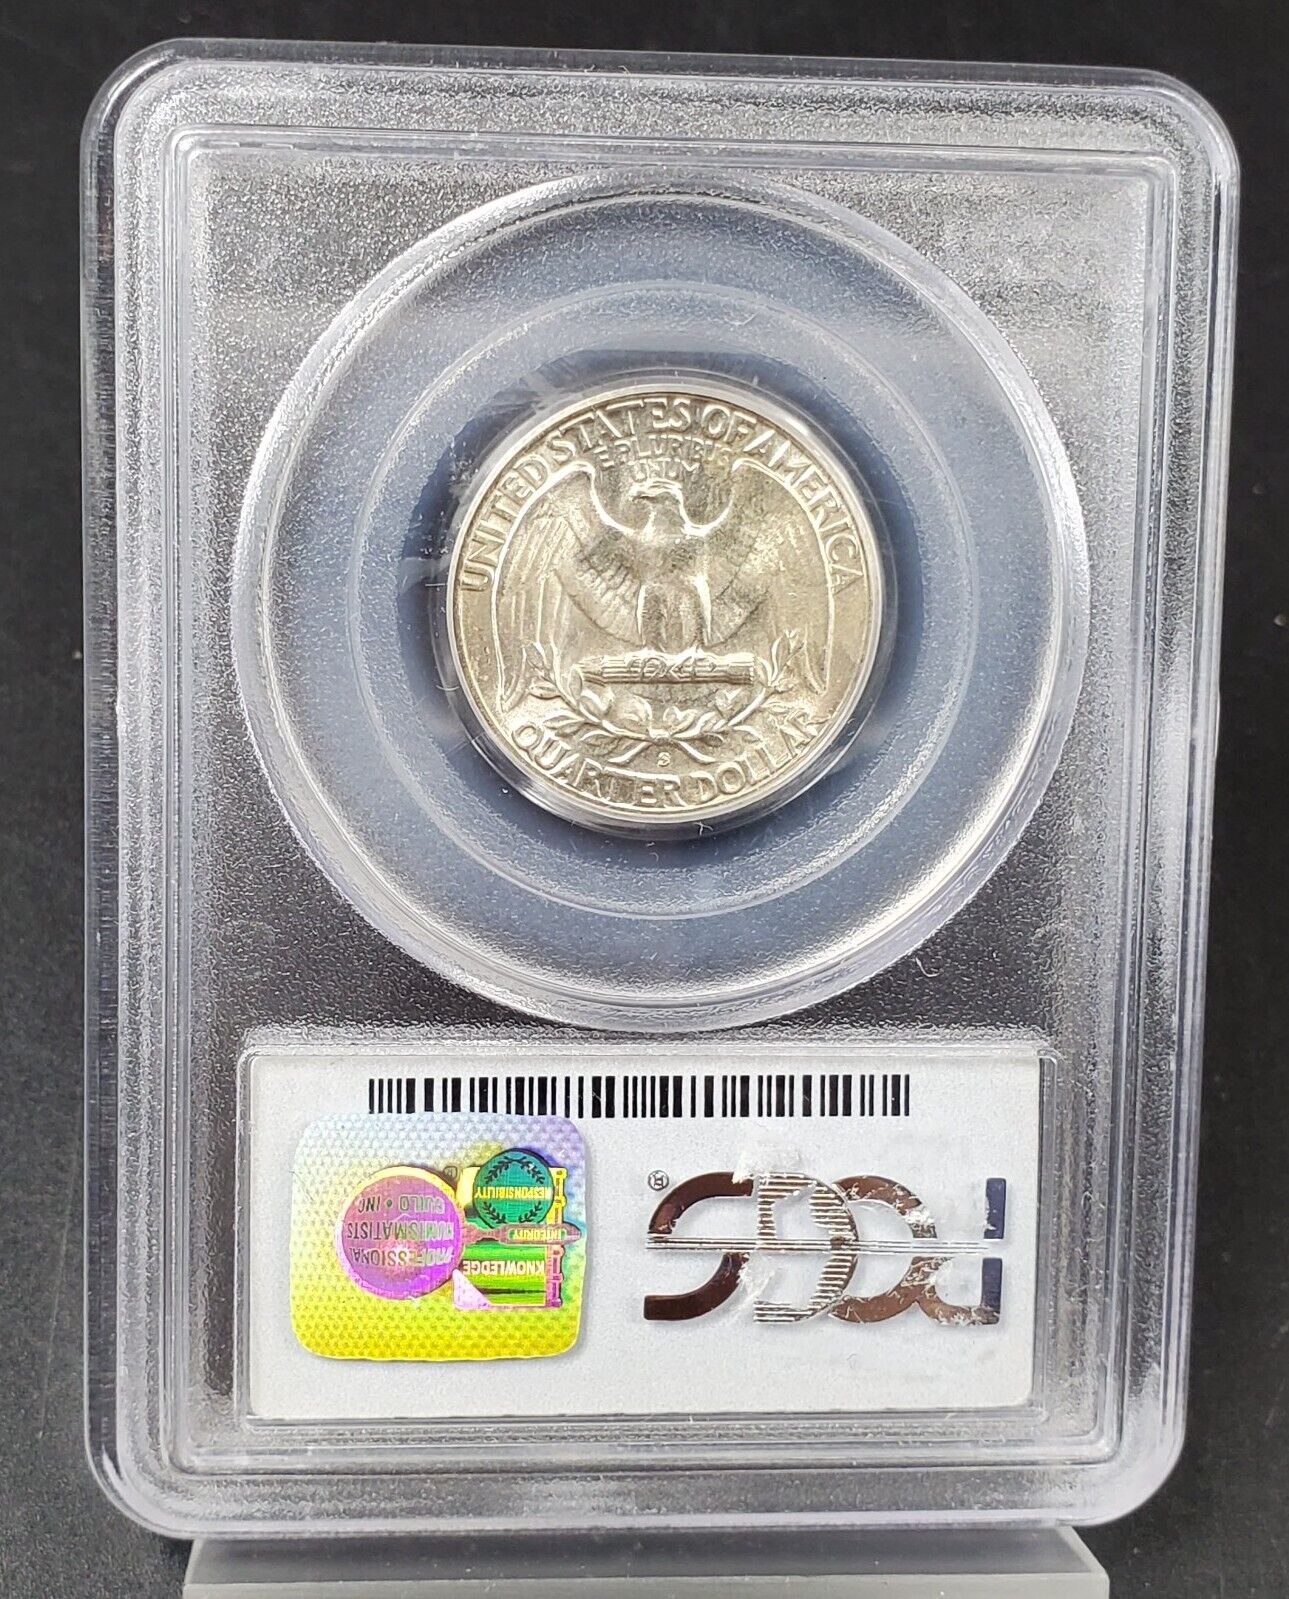 1954 S 25C Washington Quarter Silver Coin PCGS MS65 #039 Gem BU Certified